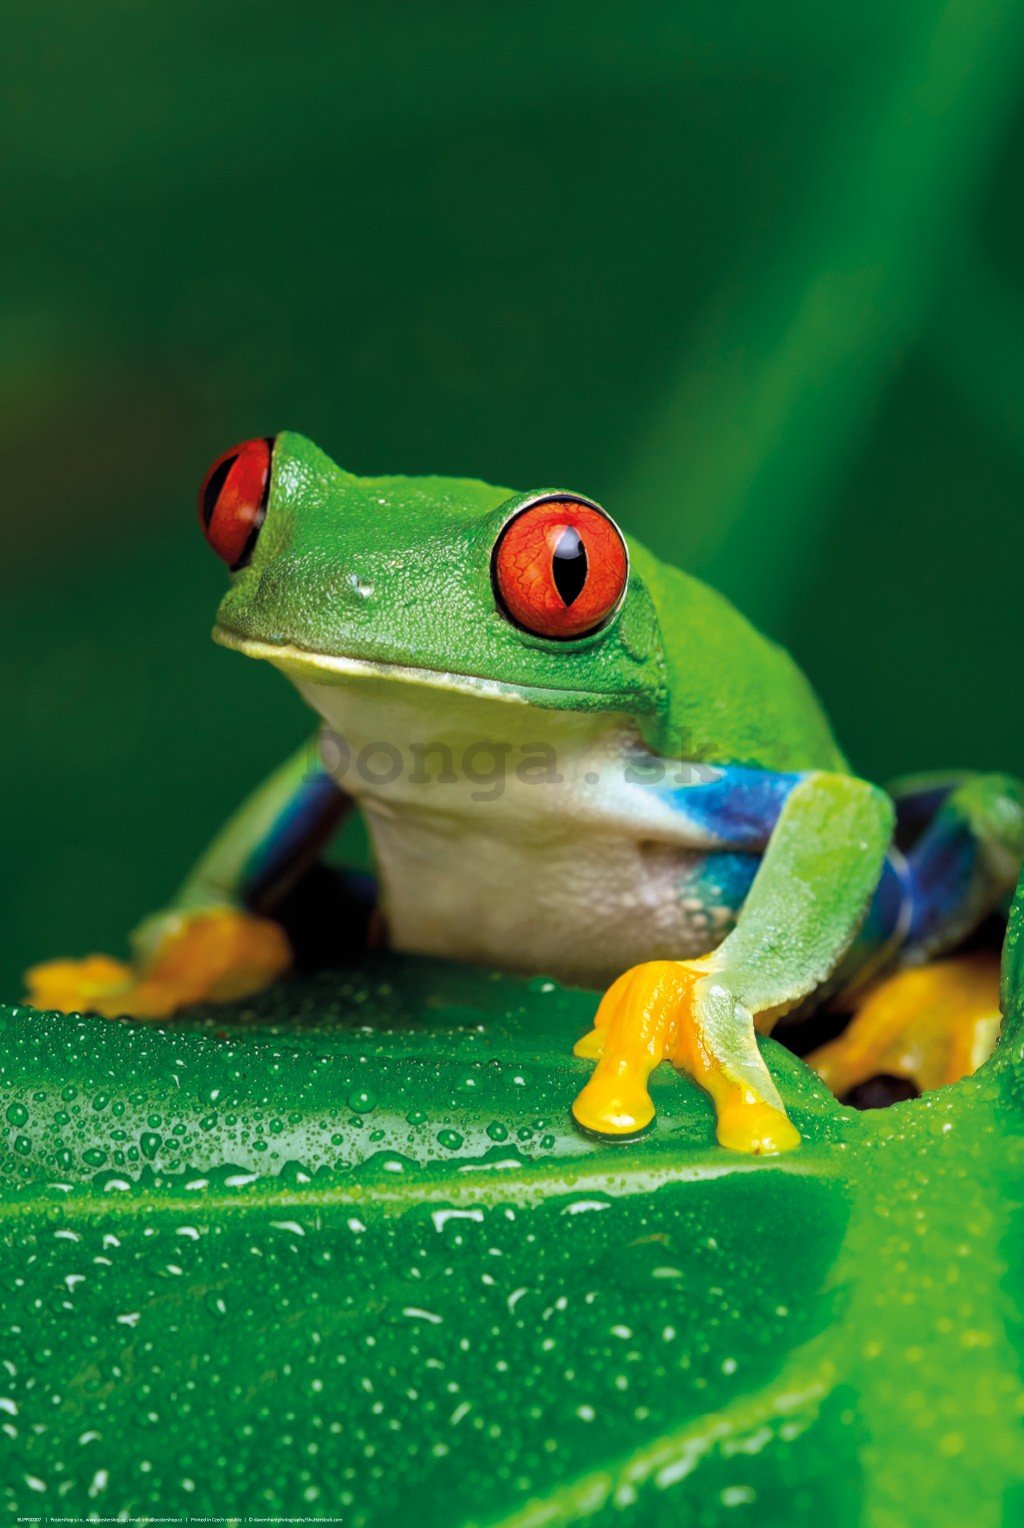 Plagát: Zelená žaba